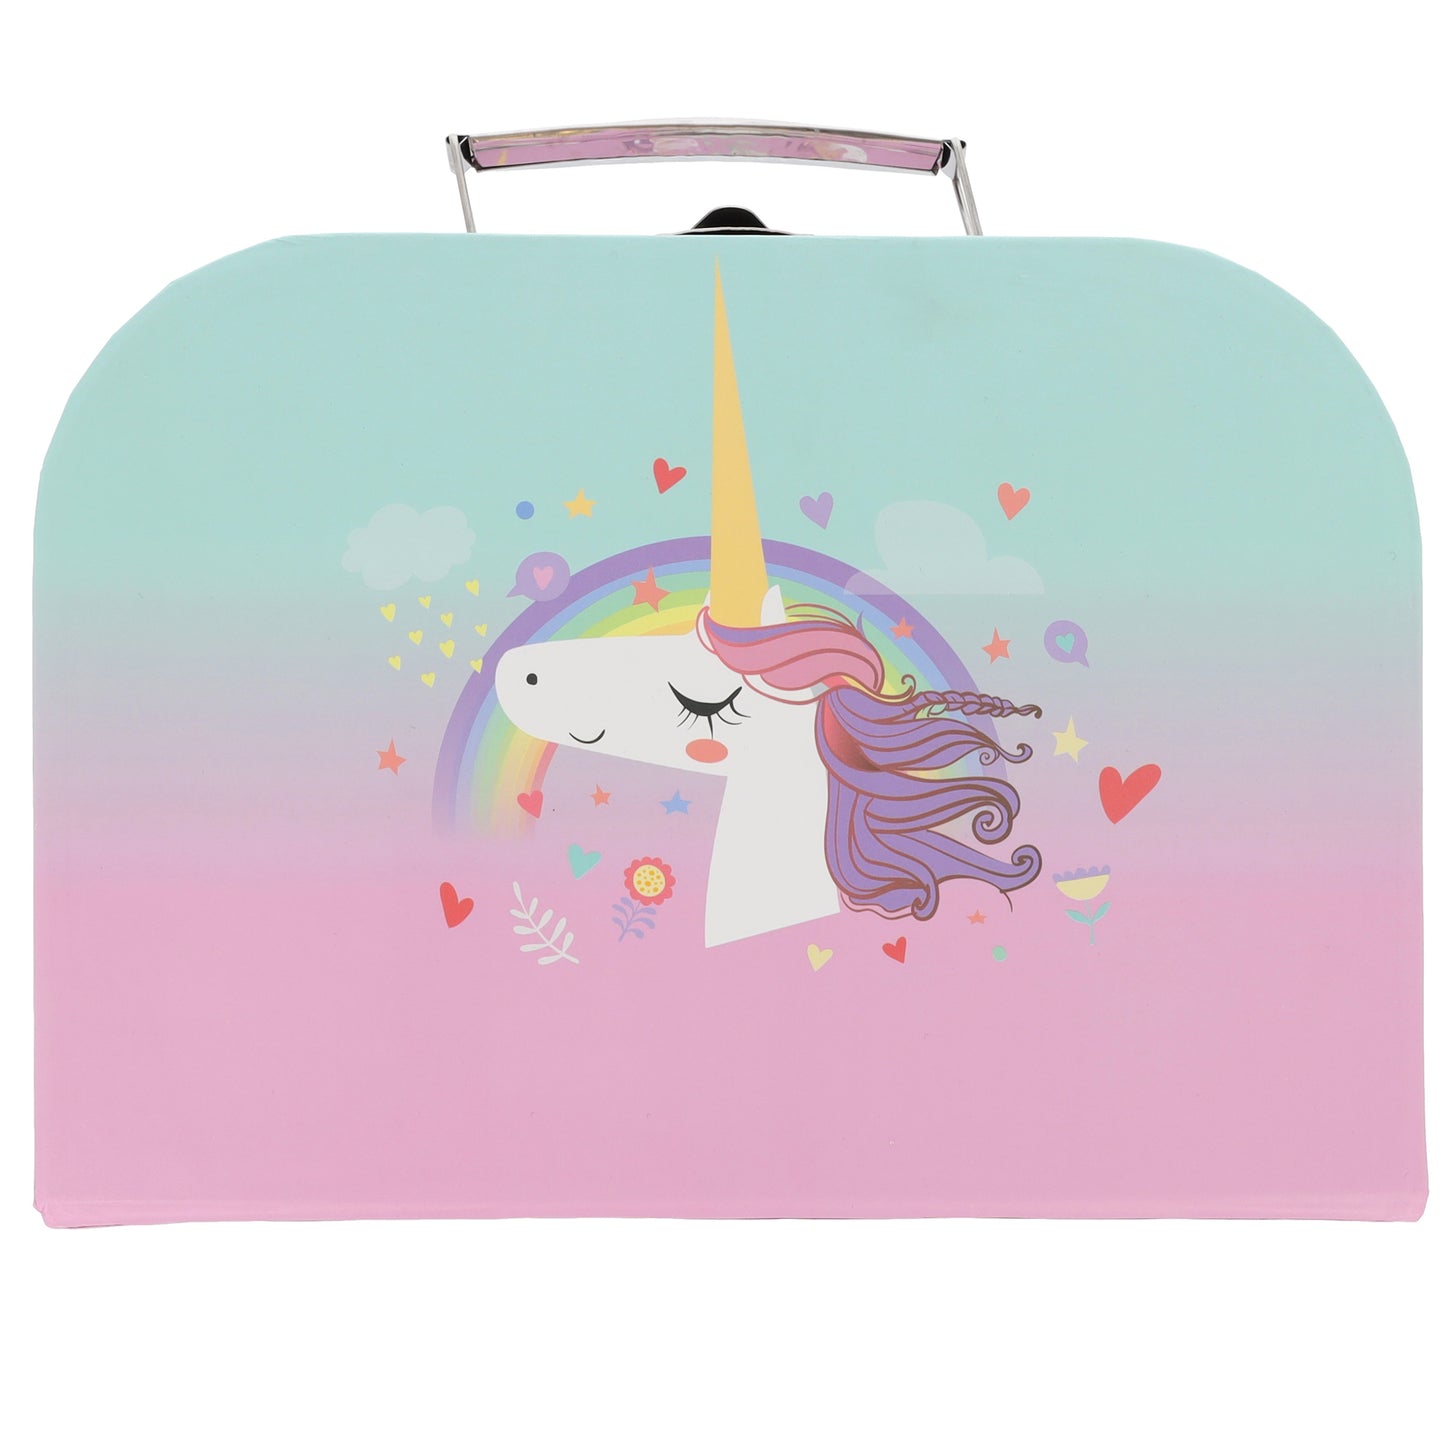 Personalised Storage Suitcase Filled Kids Gift Set  - Always Looking Good - Medium Unicorn  